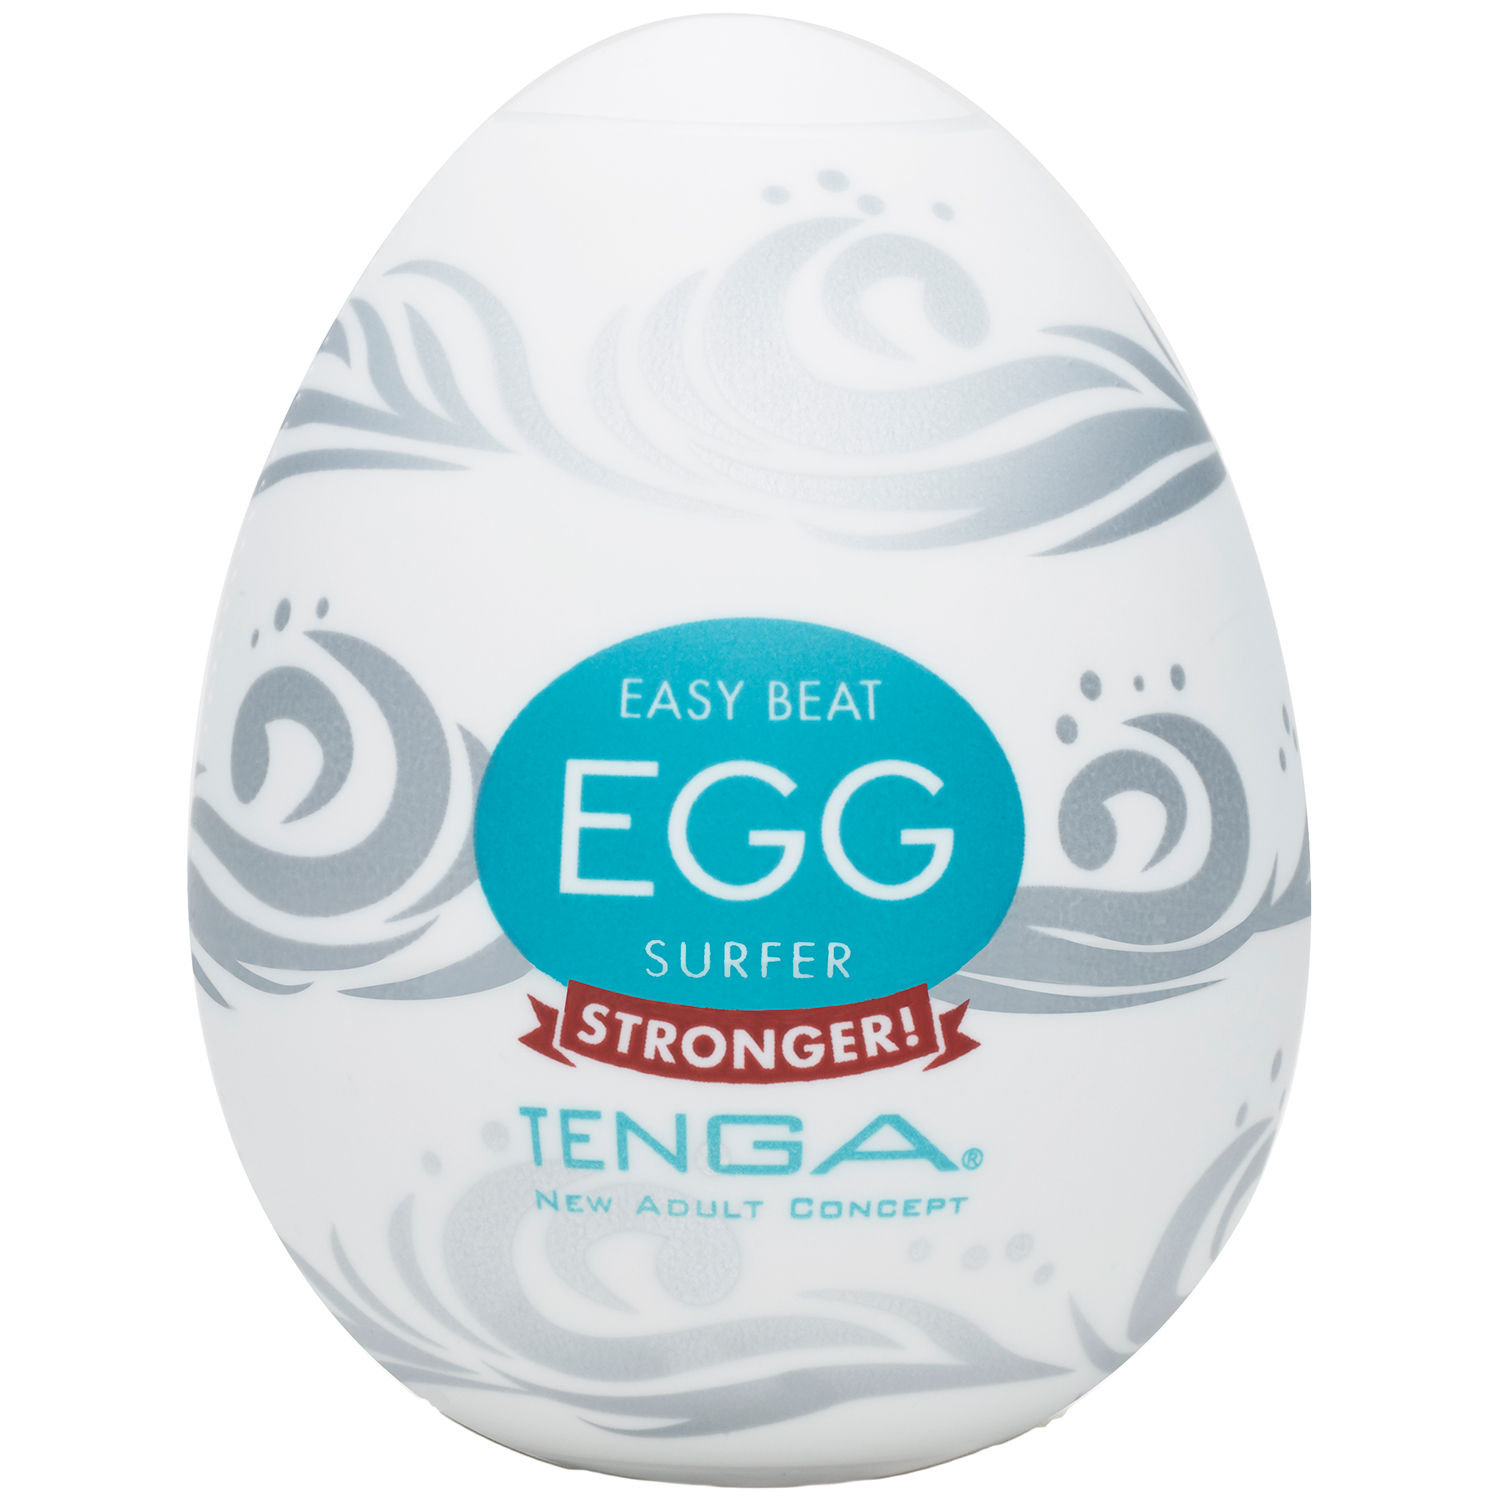 TENGA Egg Surfer Onani Handjob för Män - TENGA